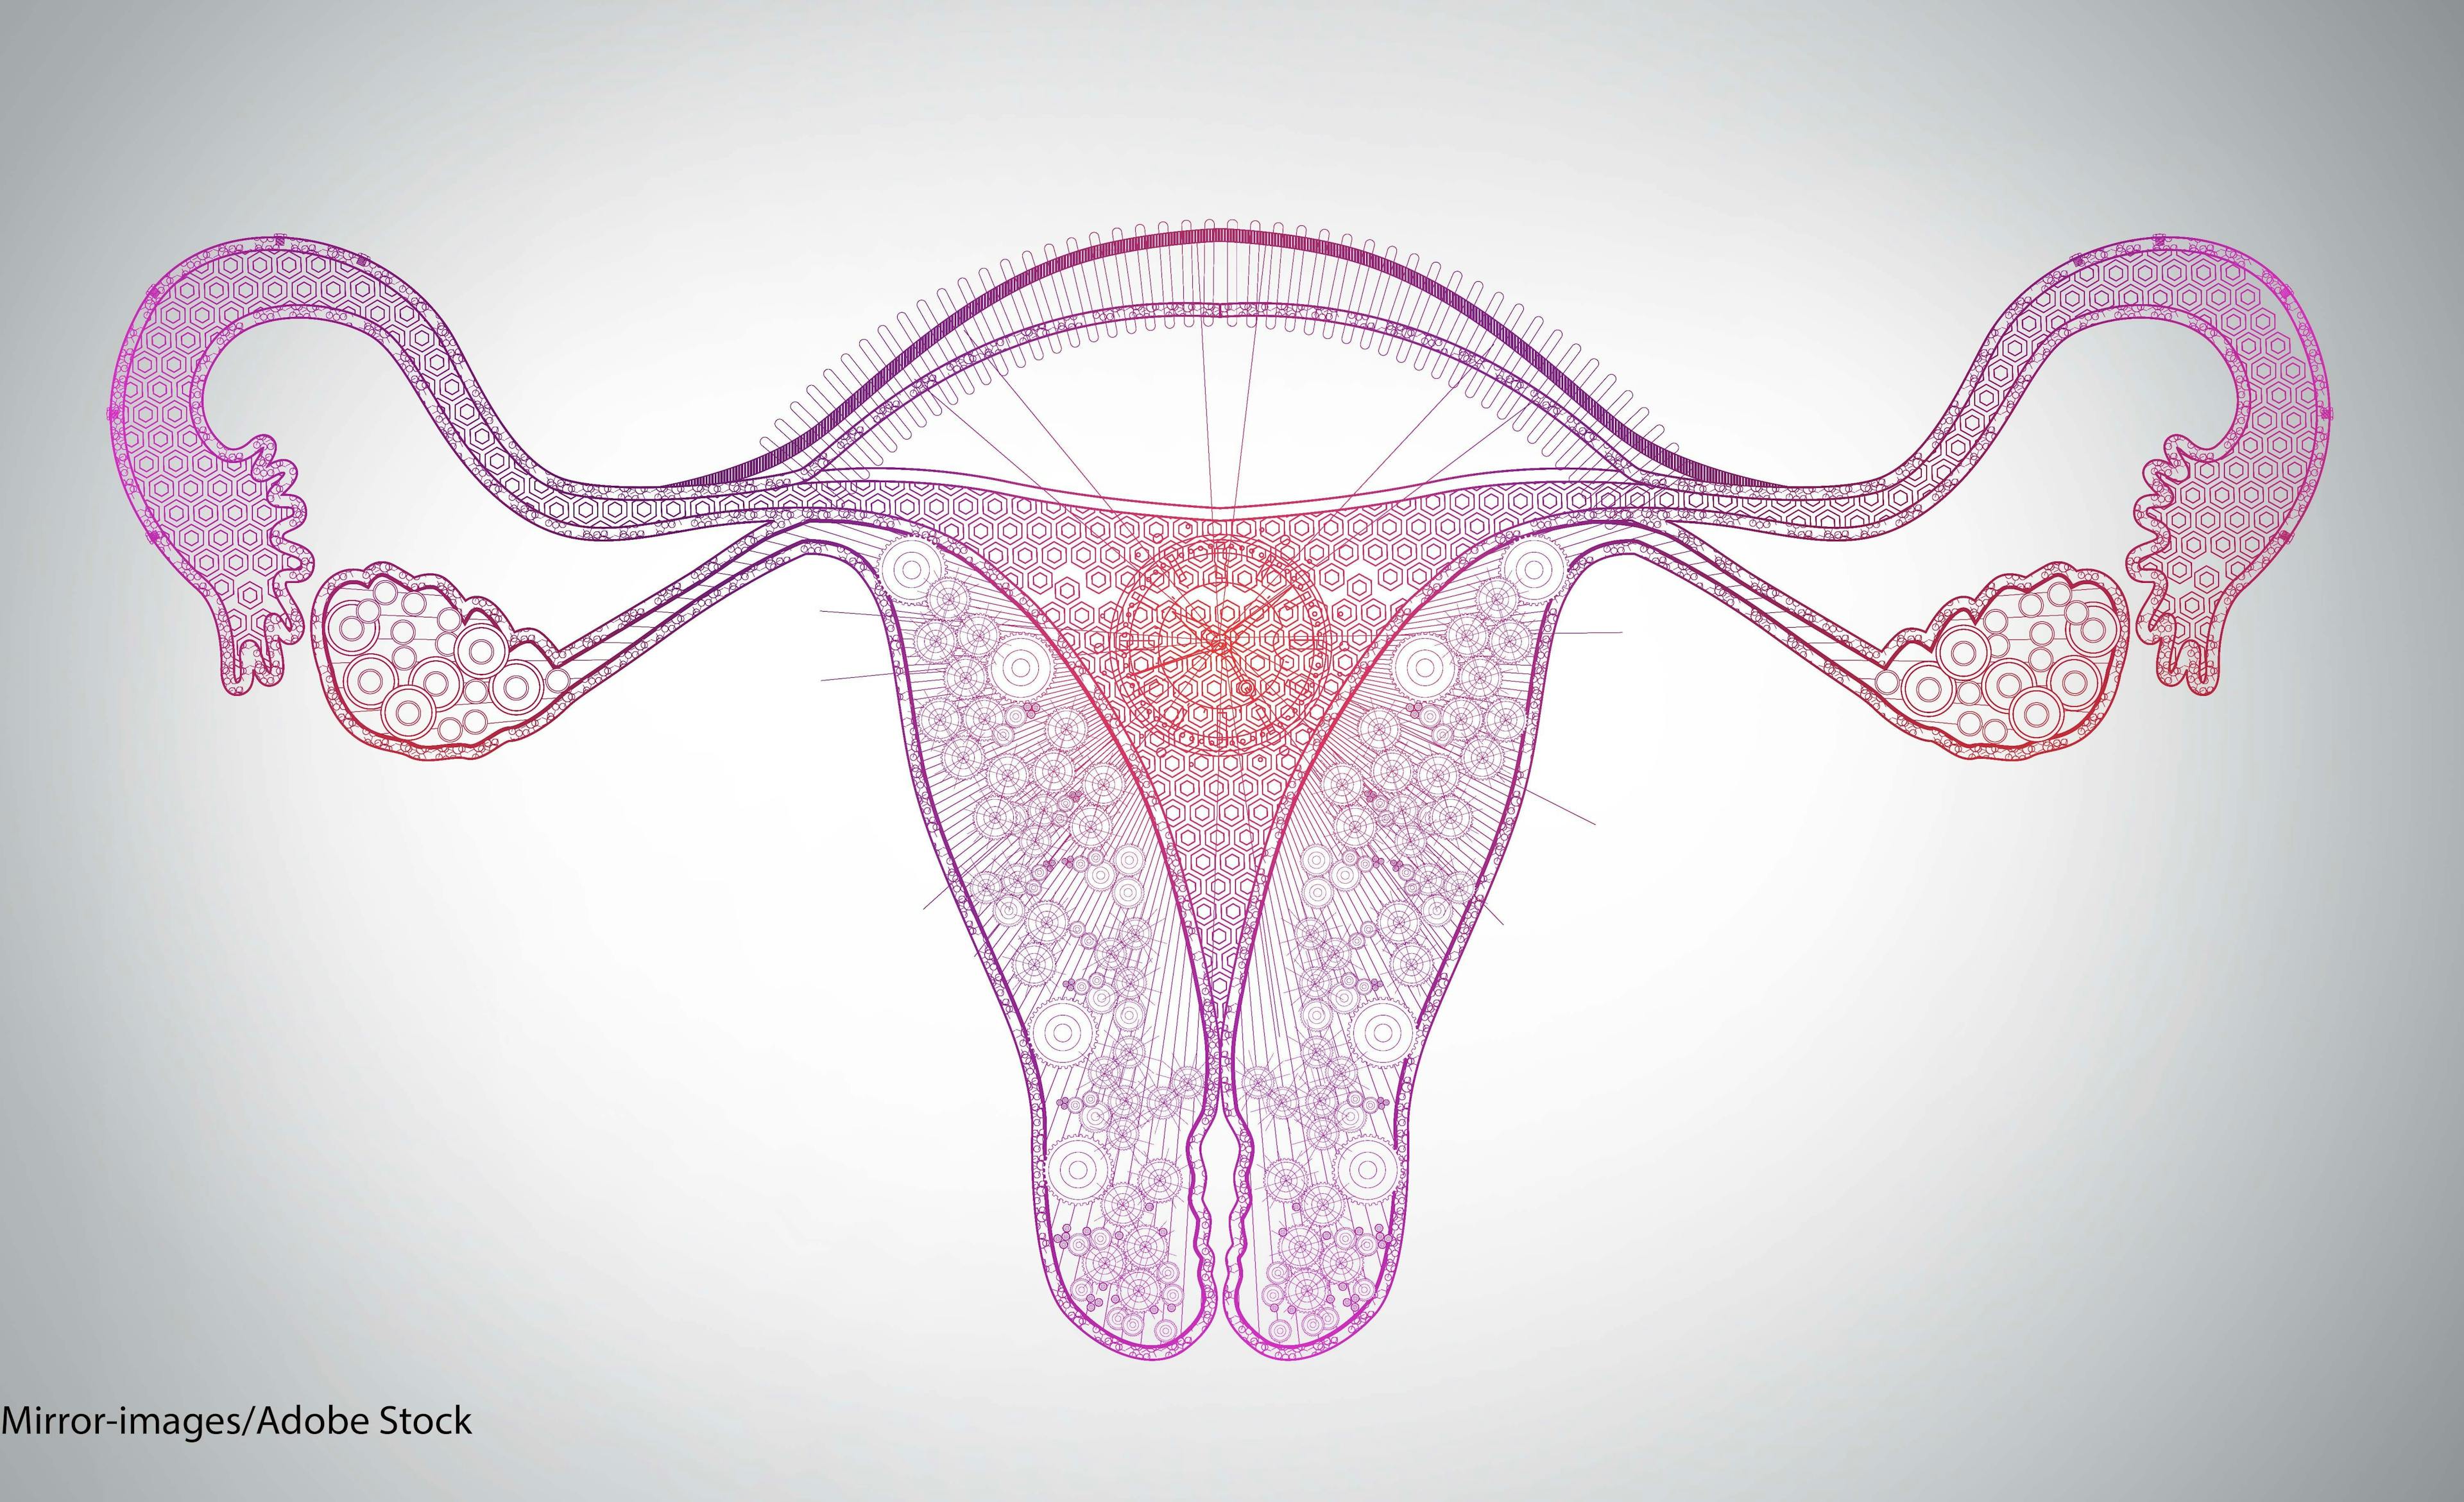 Nivolumab May Induce Promising Efficacy Outcomes in Certain Gynecologic Malignancies